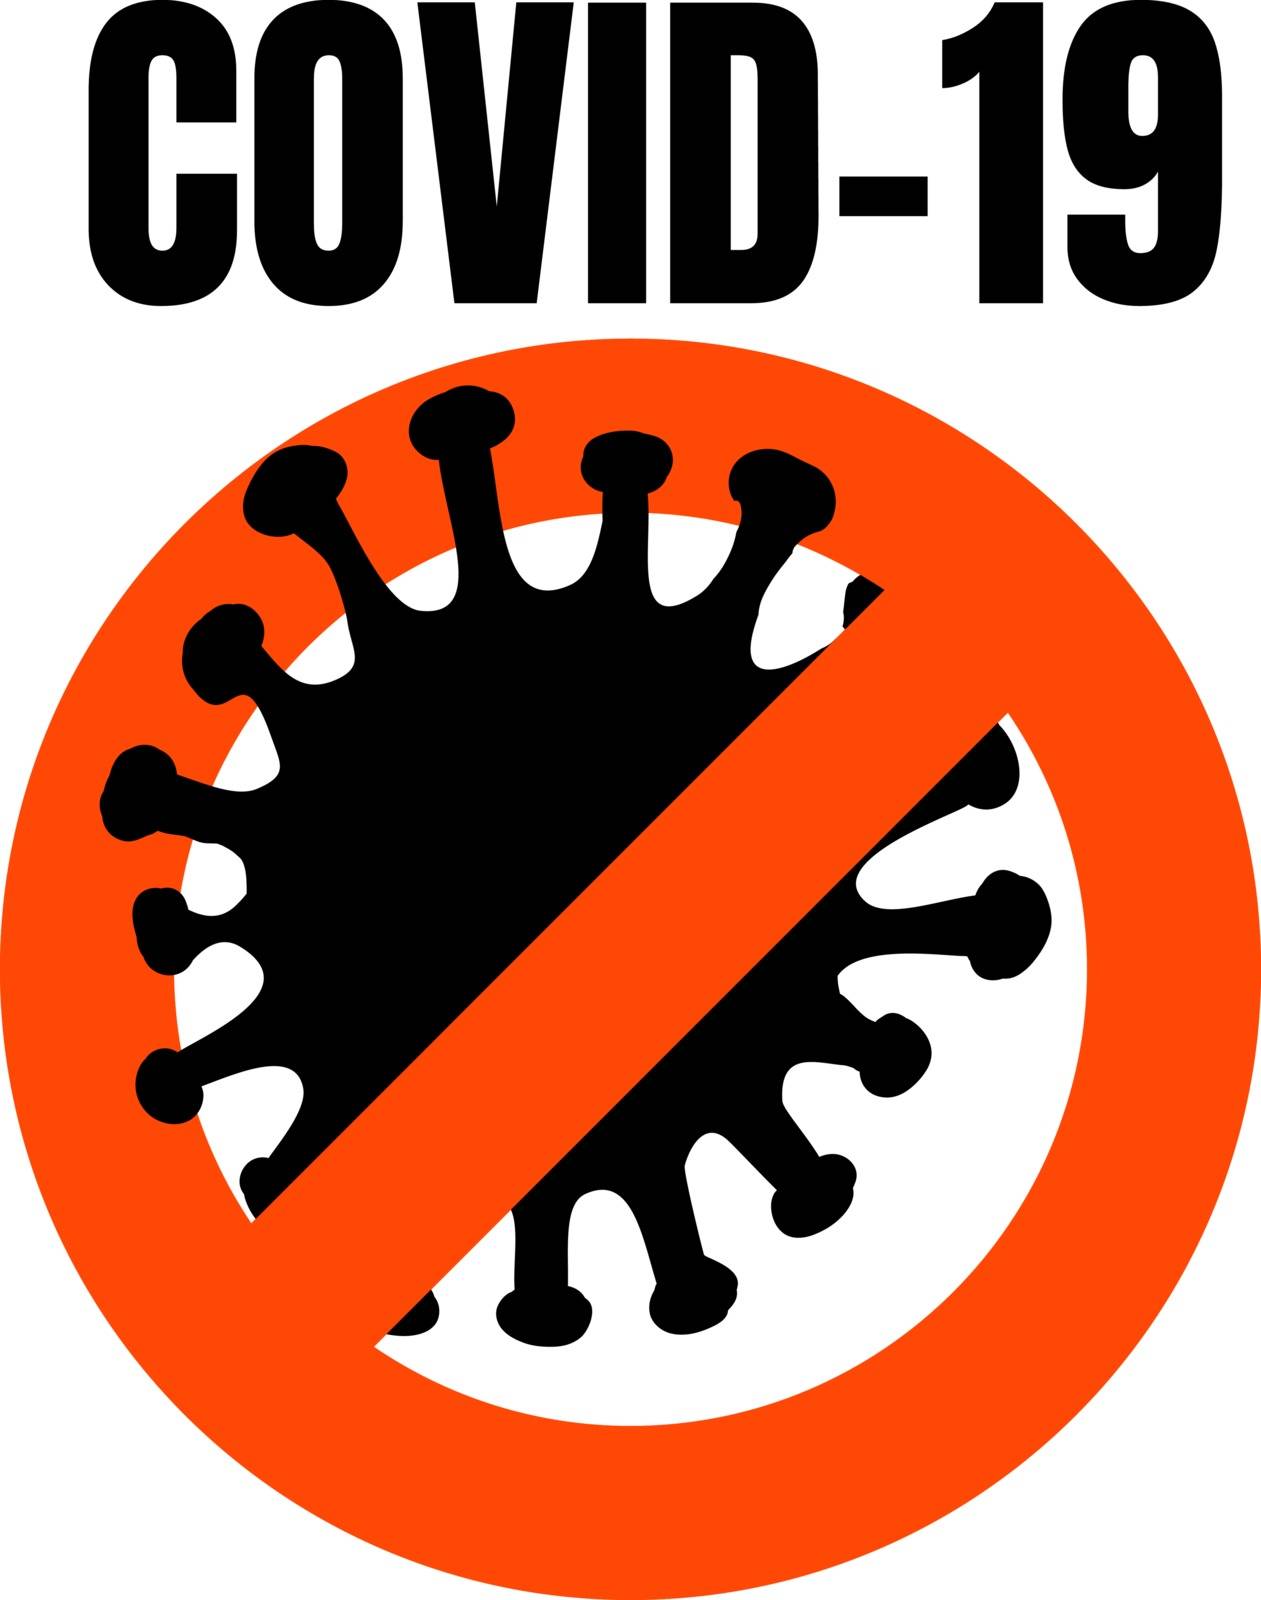 Abstract virus strain model coronavirus 2019-nCoV COVID-19 MERS-Cov Novel coronavirus crossed out red STOP sign by Asnia